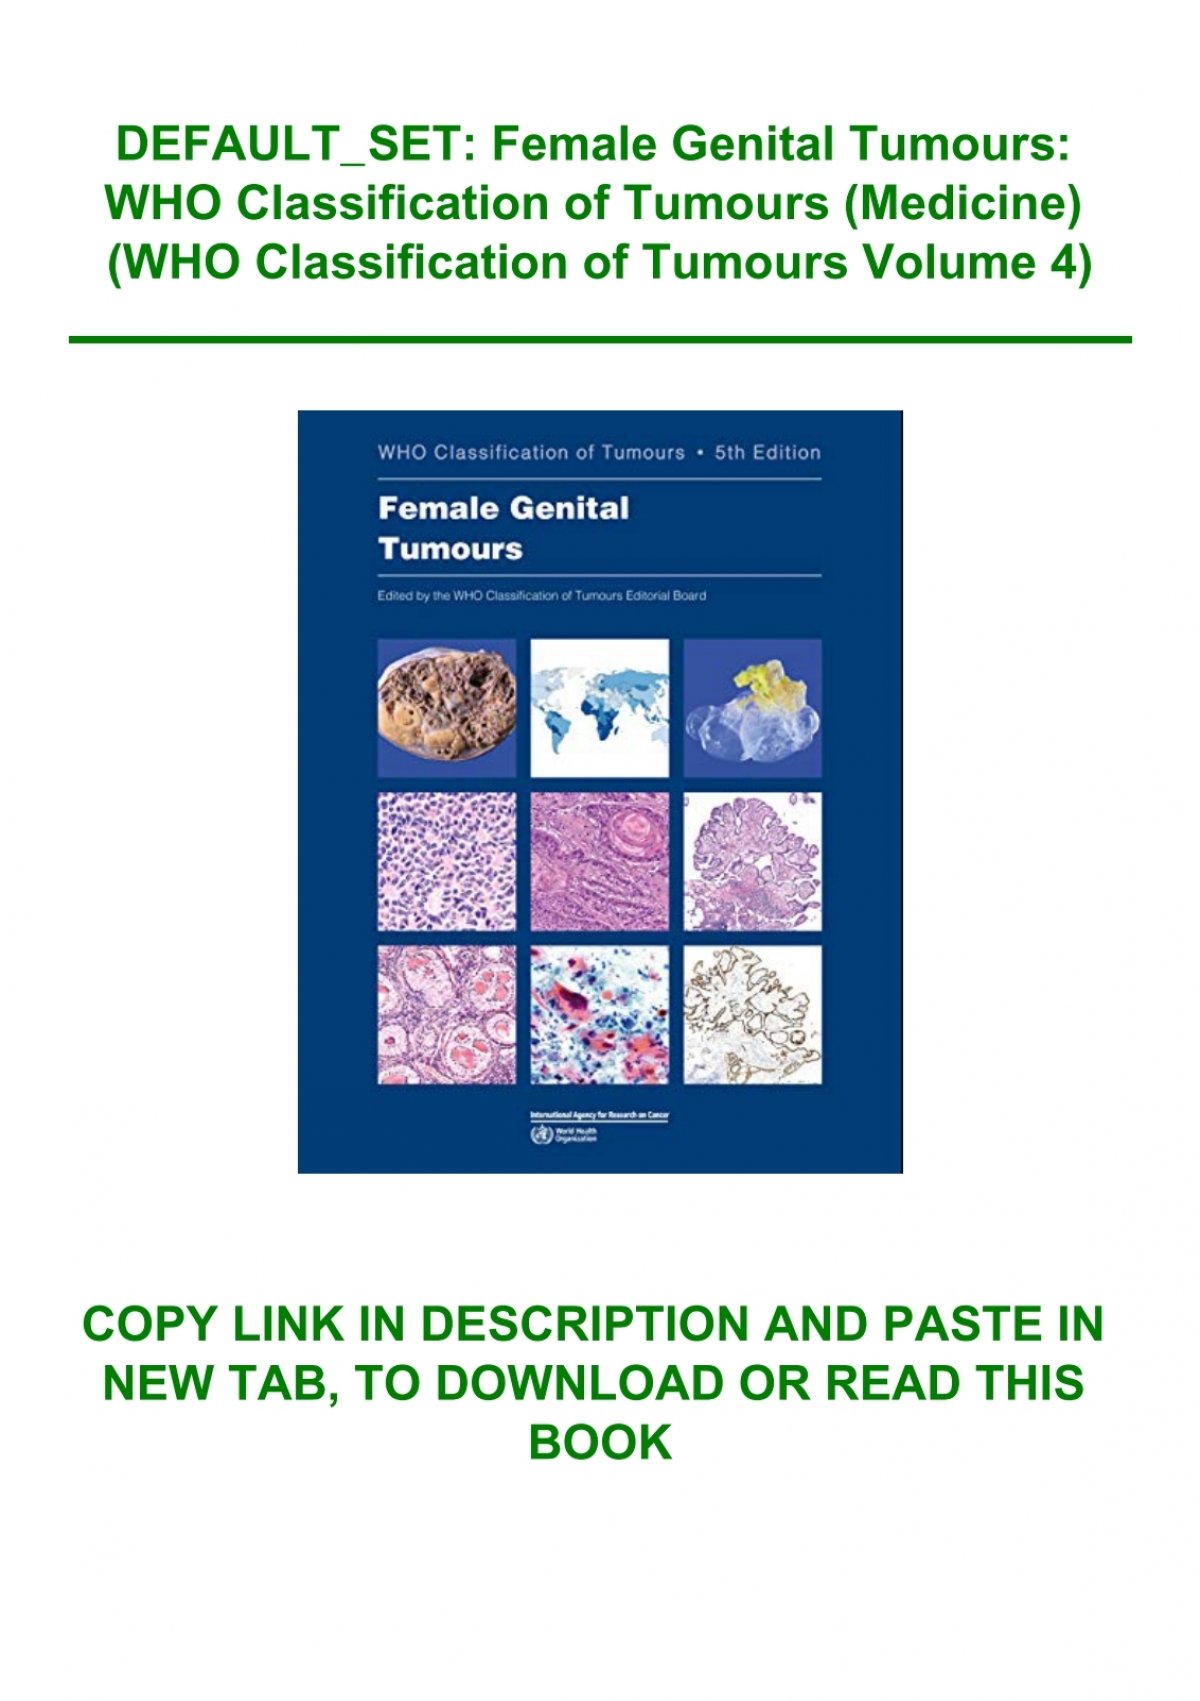 Read Pdf Default Set Female Genital Tumours Who Classification Of Tumours Medicine Who